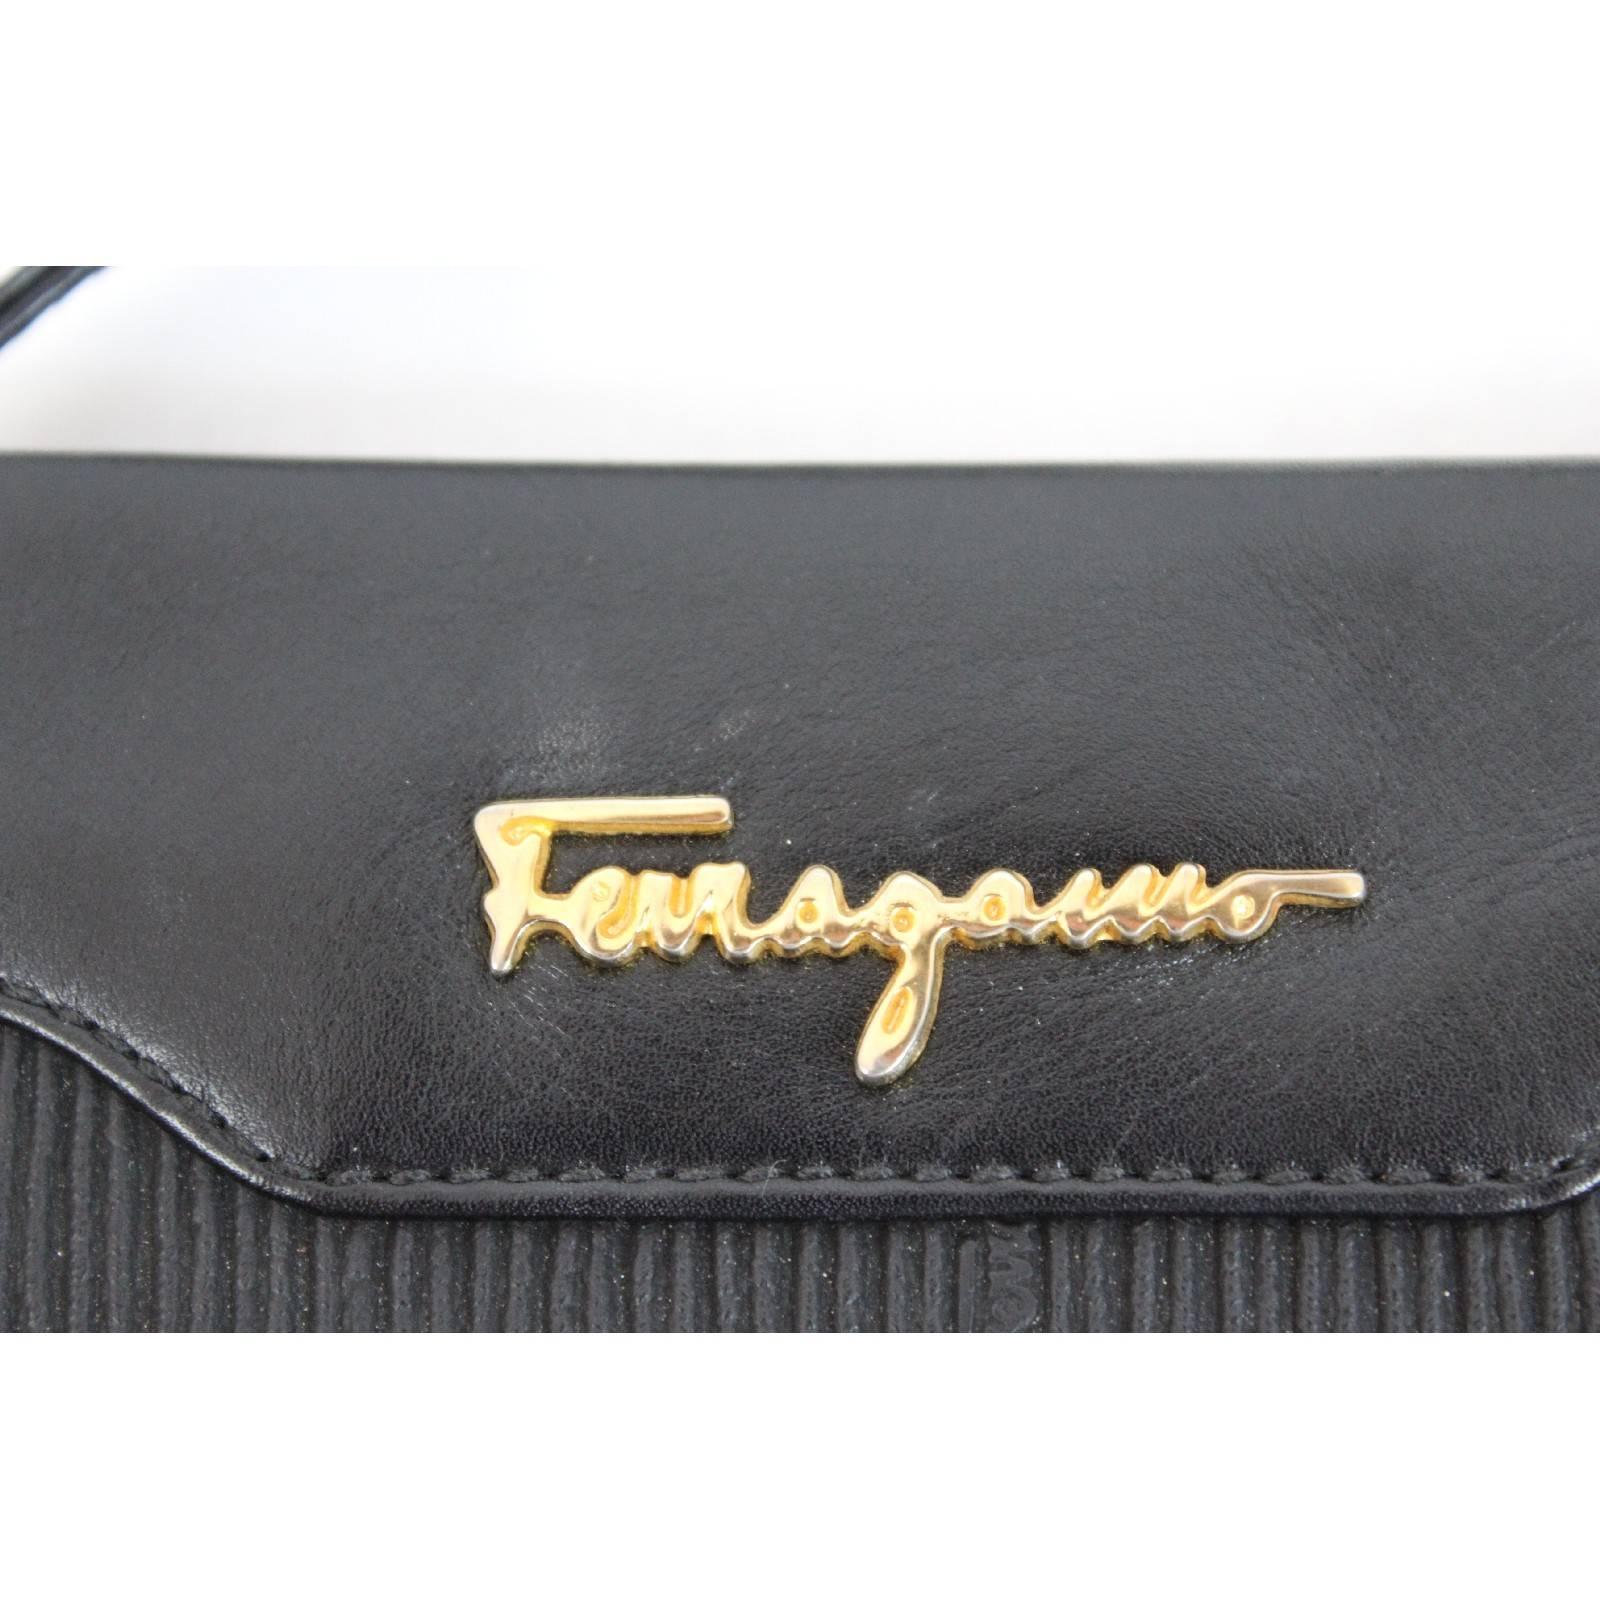 Salvatore Ferragamo black leather clutch bag cod. ad 211183 made italy 1980s 4